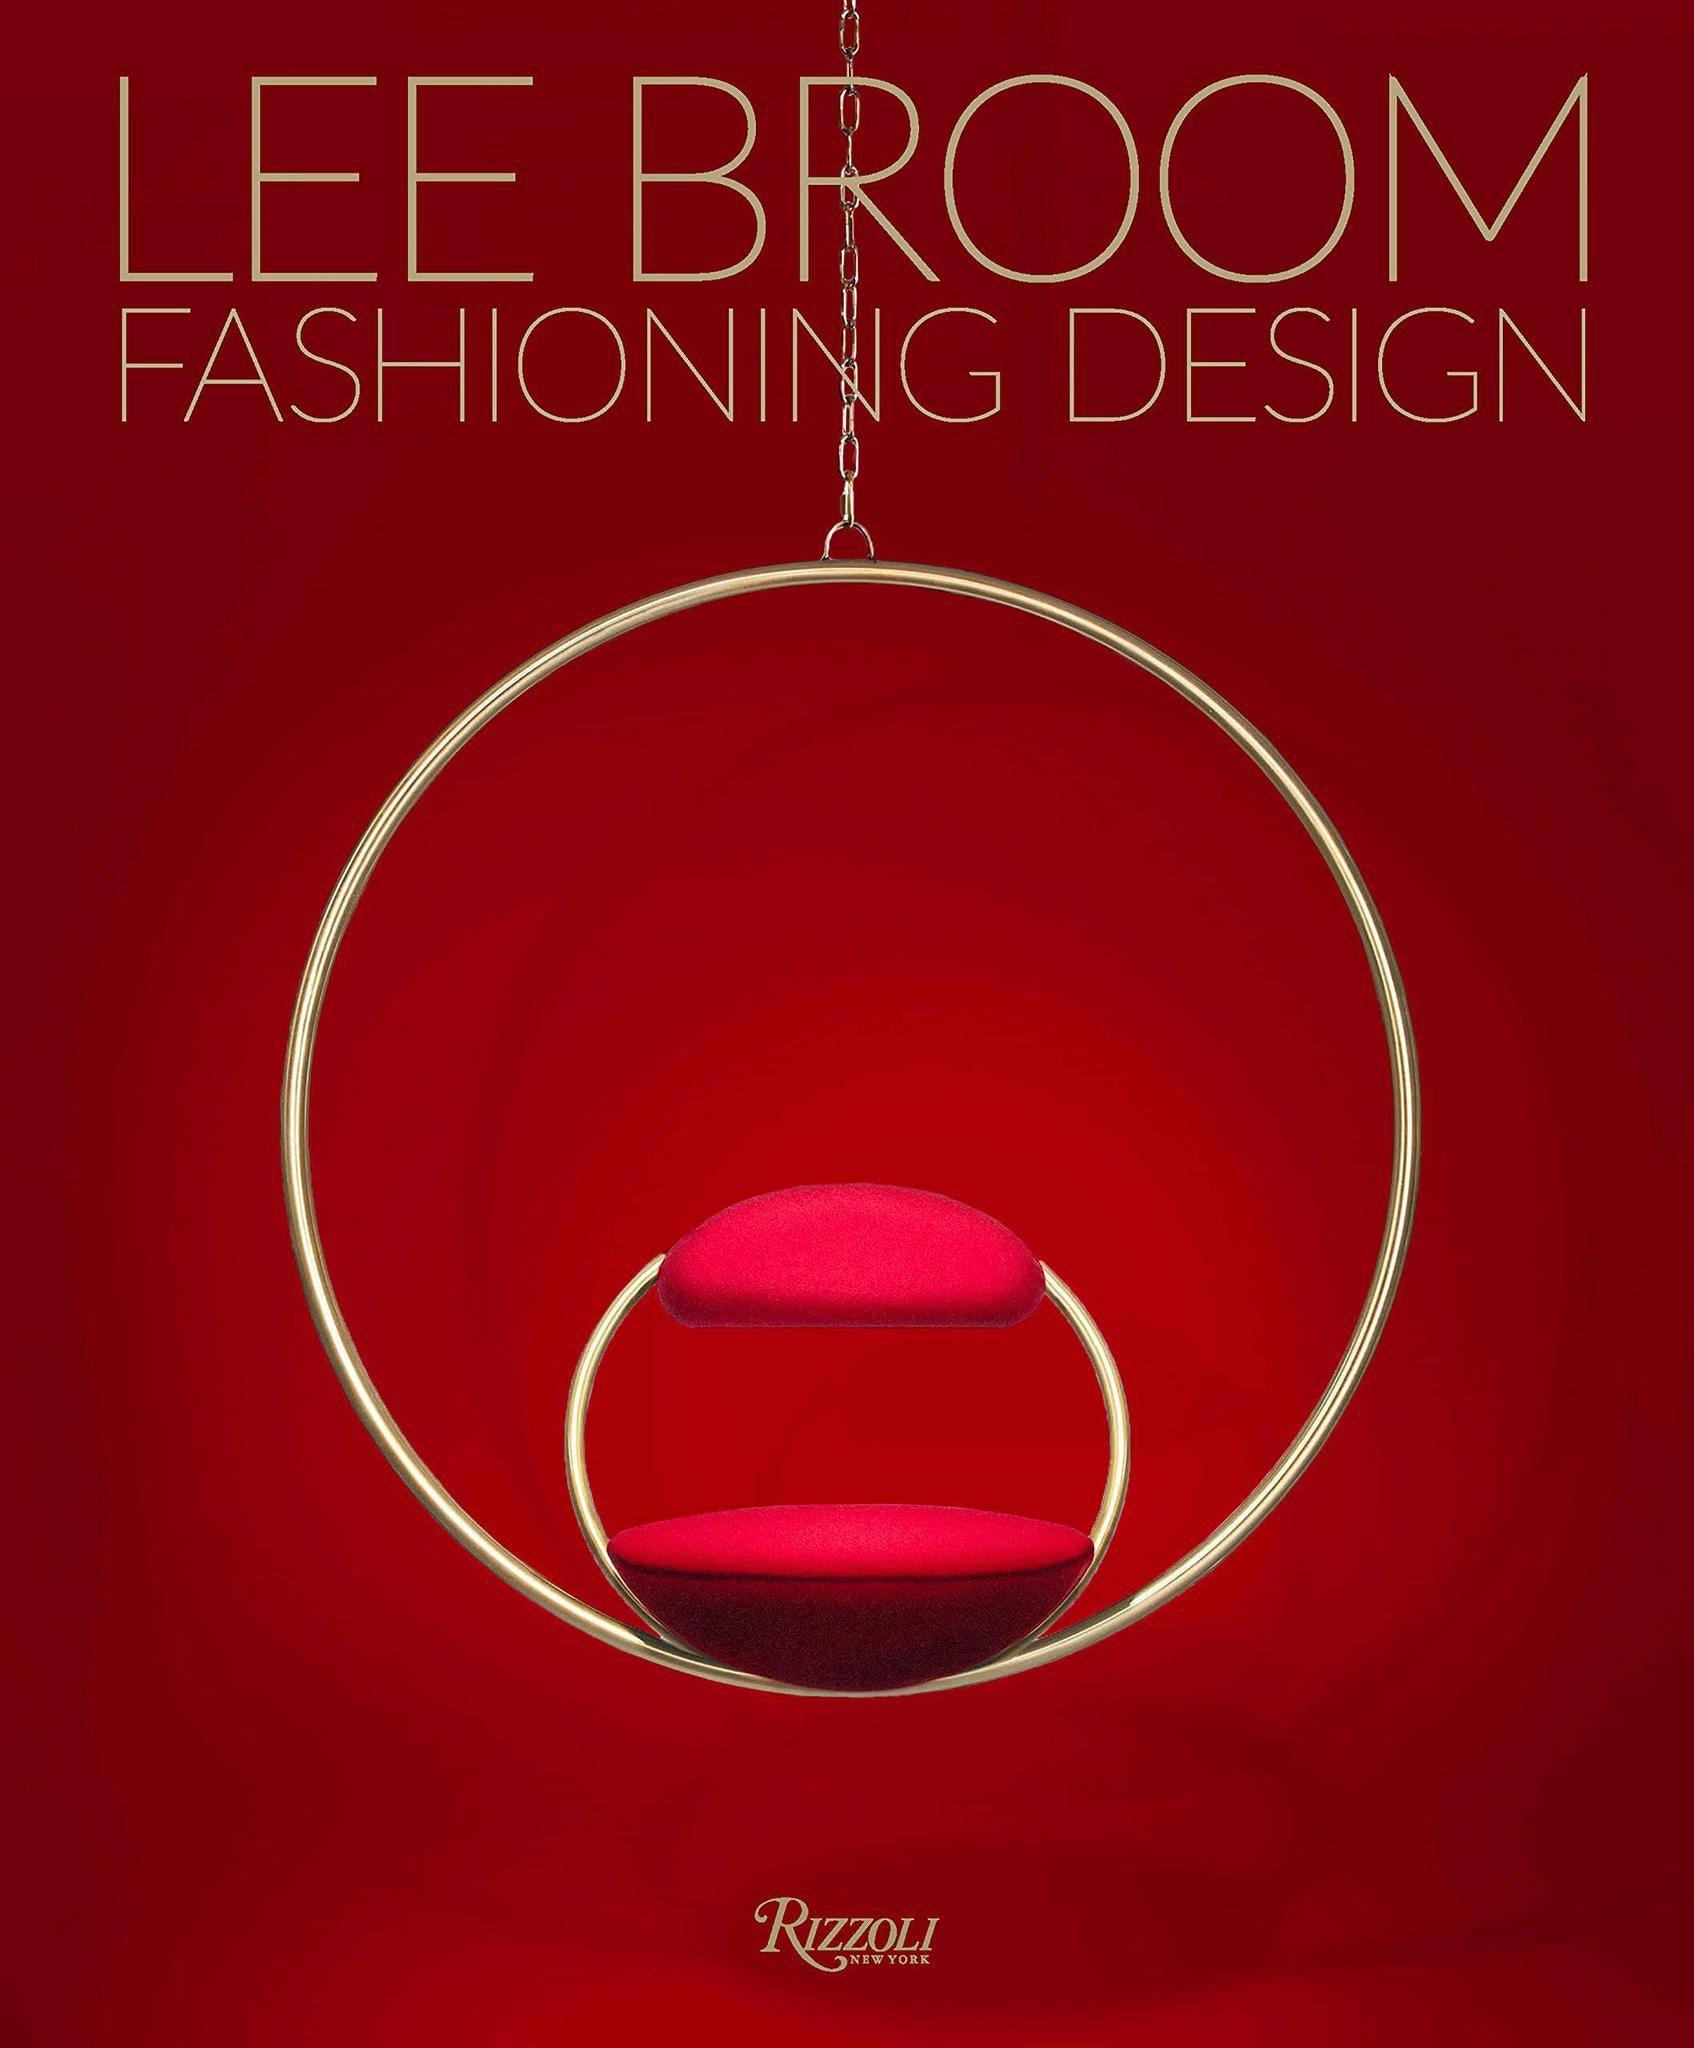 Fashioning Design: Lee Broom - Thirty Six Knots - thirtysixknots.com